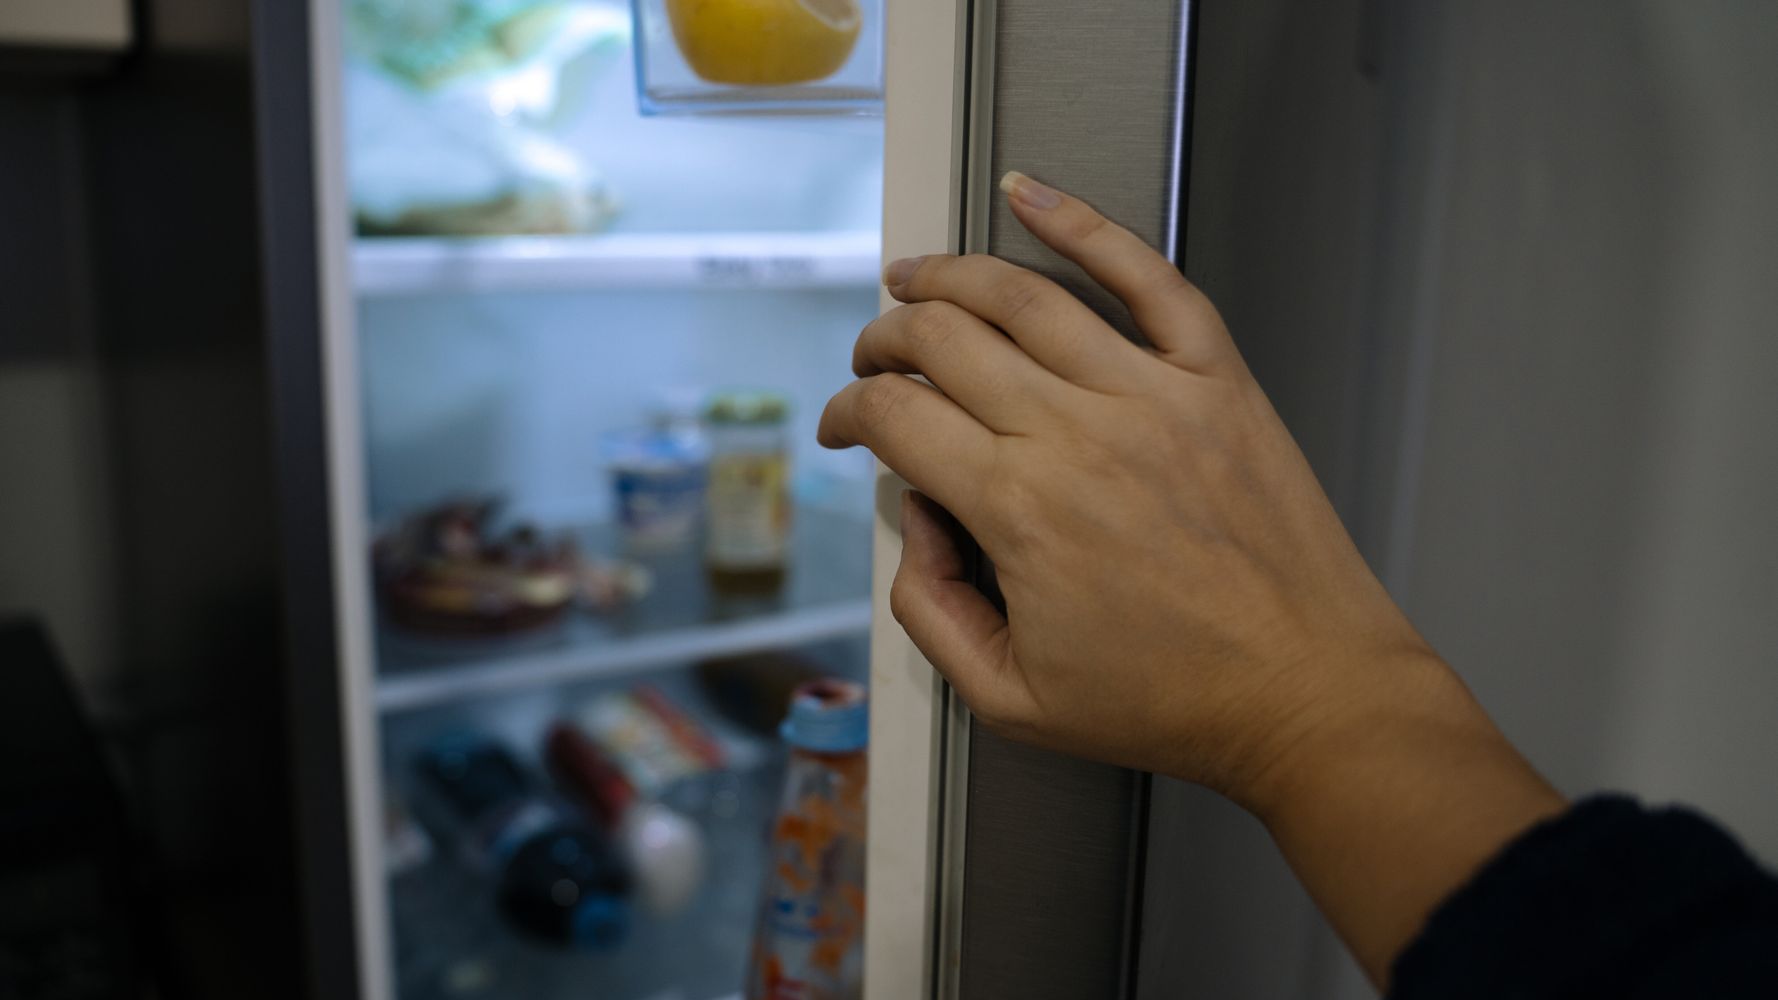 Fridge and freezer cleaner. Clean fridge. Freezer cleaning - Conservatis